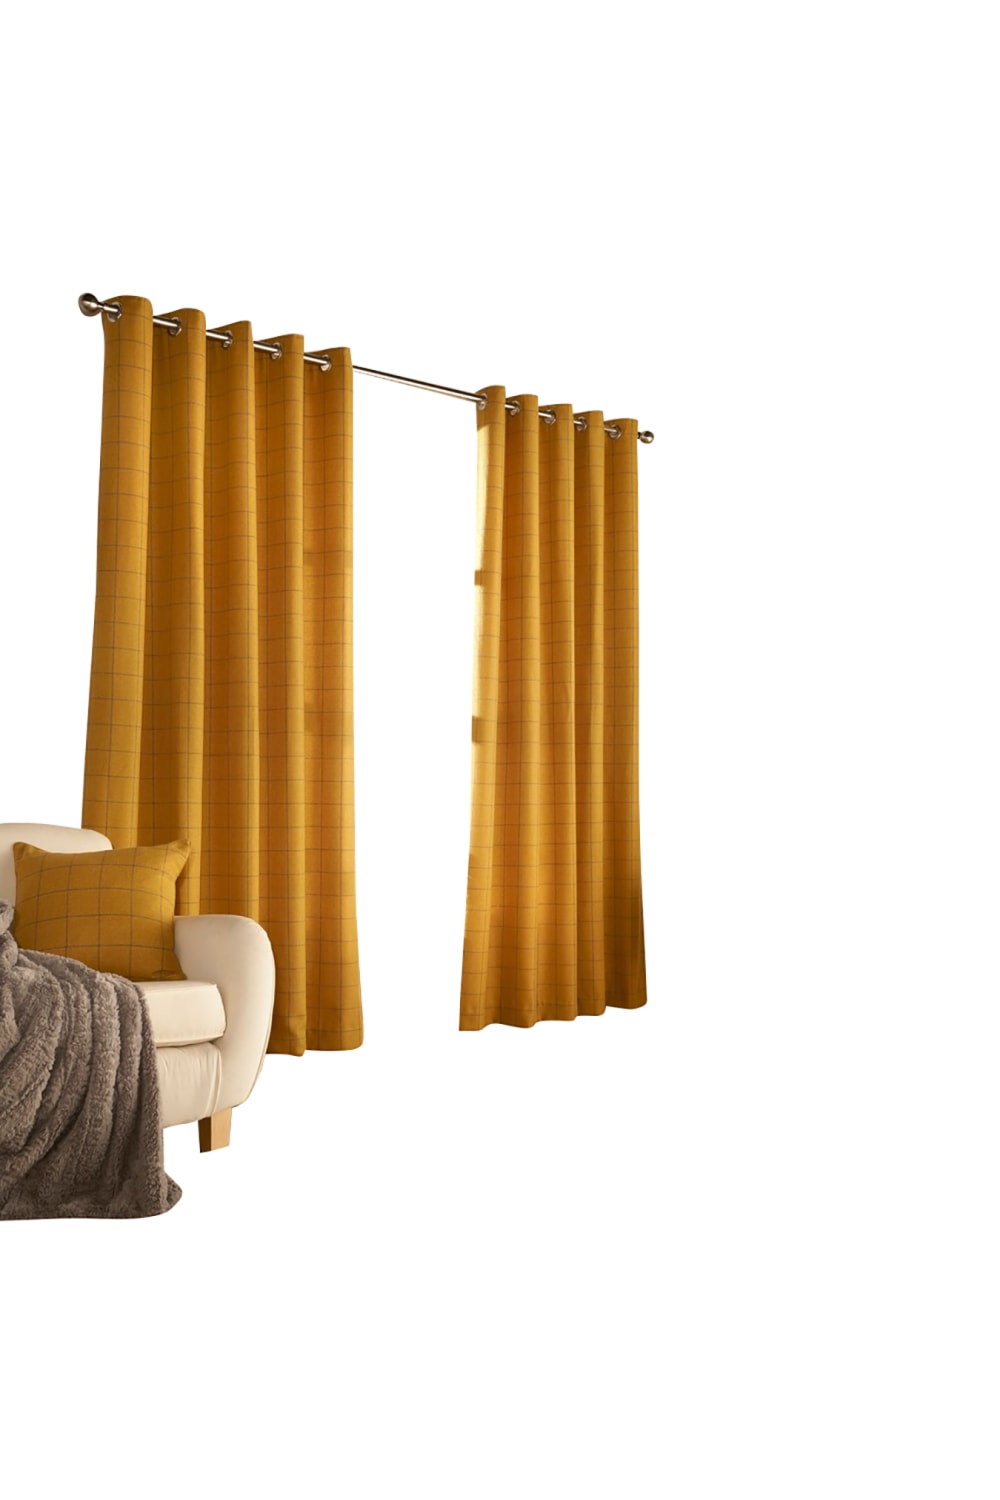 Furn Ellis Ringtop Eyelet Curtains (Ochre) (90 x 90 in)